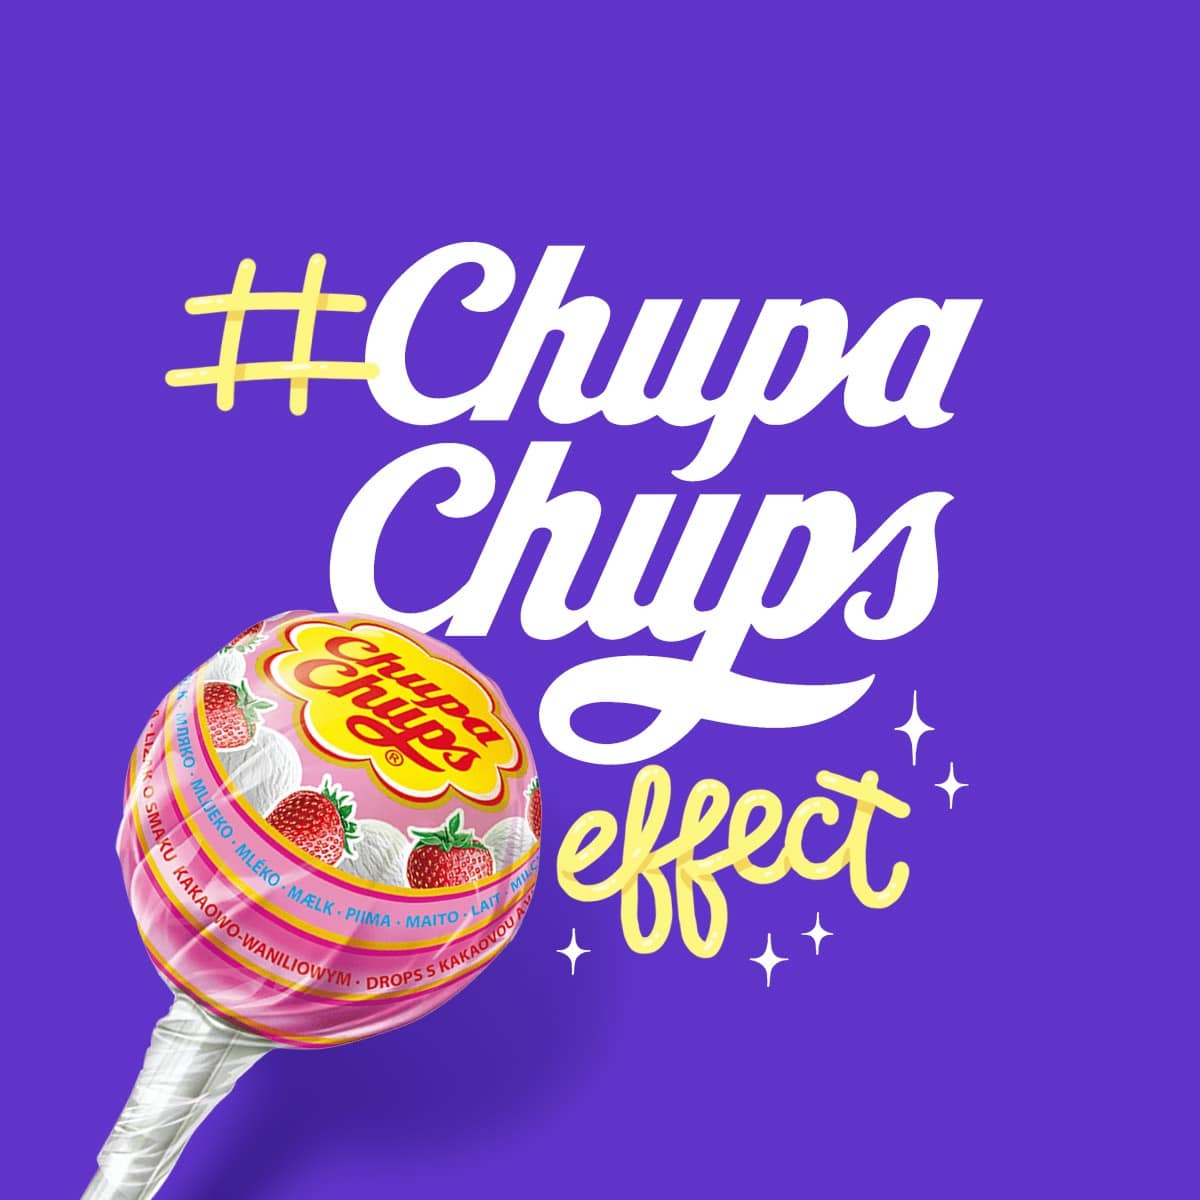 La stratégie marketing food de Chupa Chups avec le challenge Chupa Chups effect